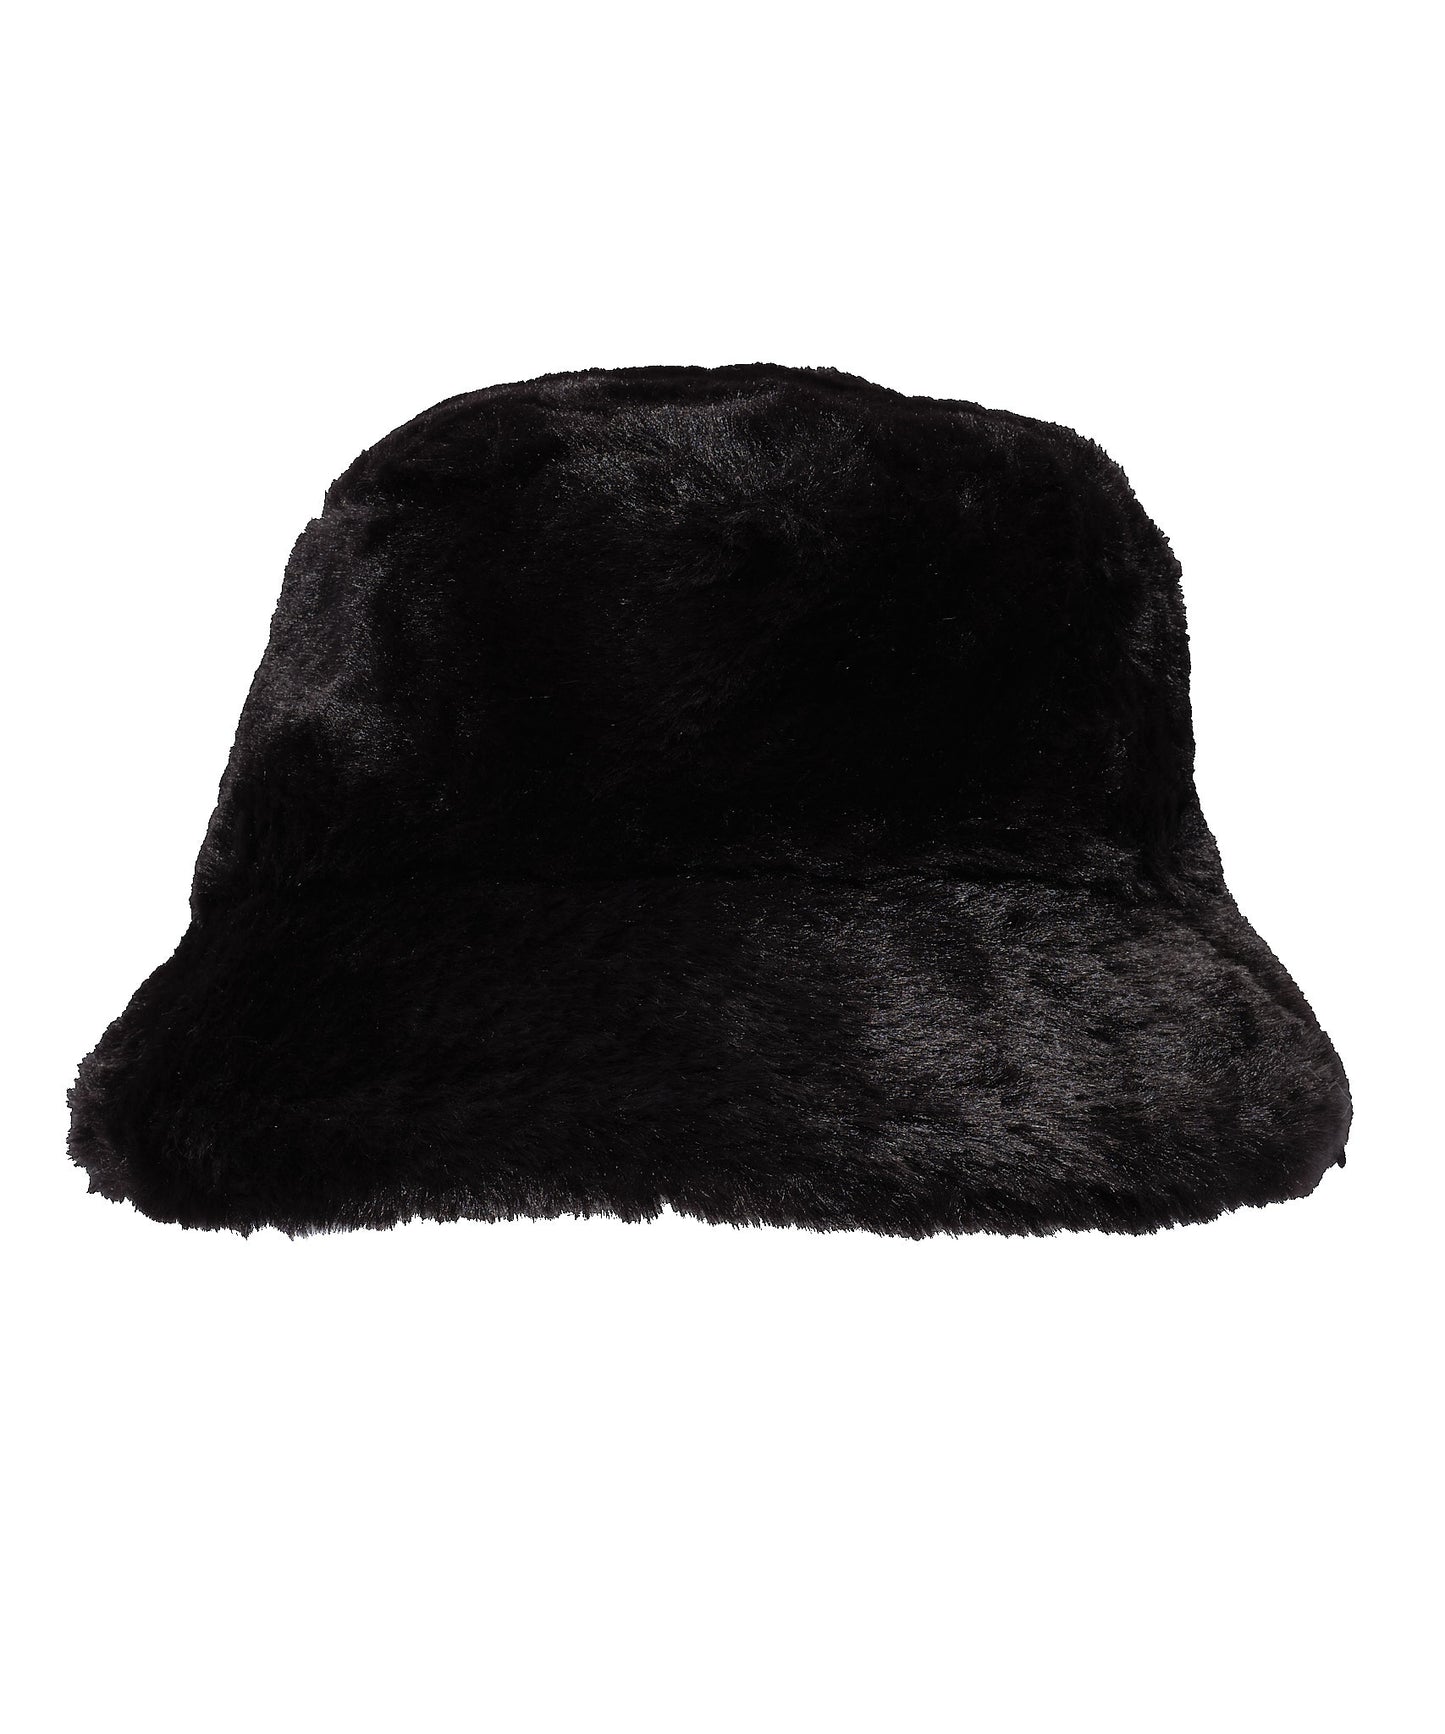 Faux Fur Bucket Hat in color Black